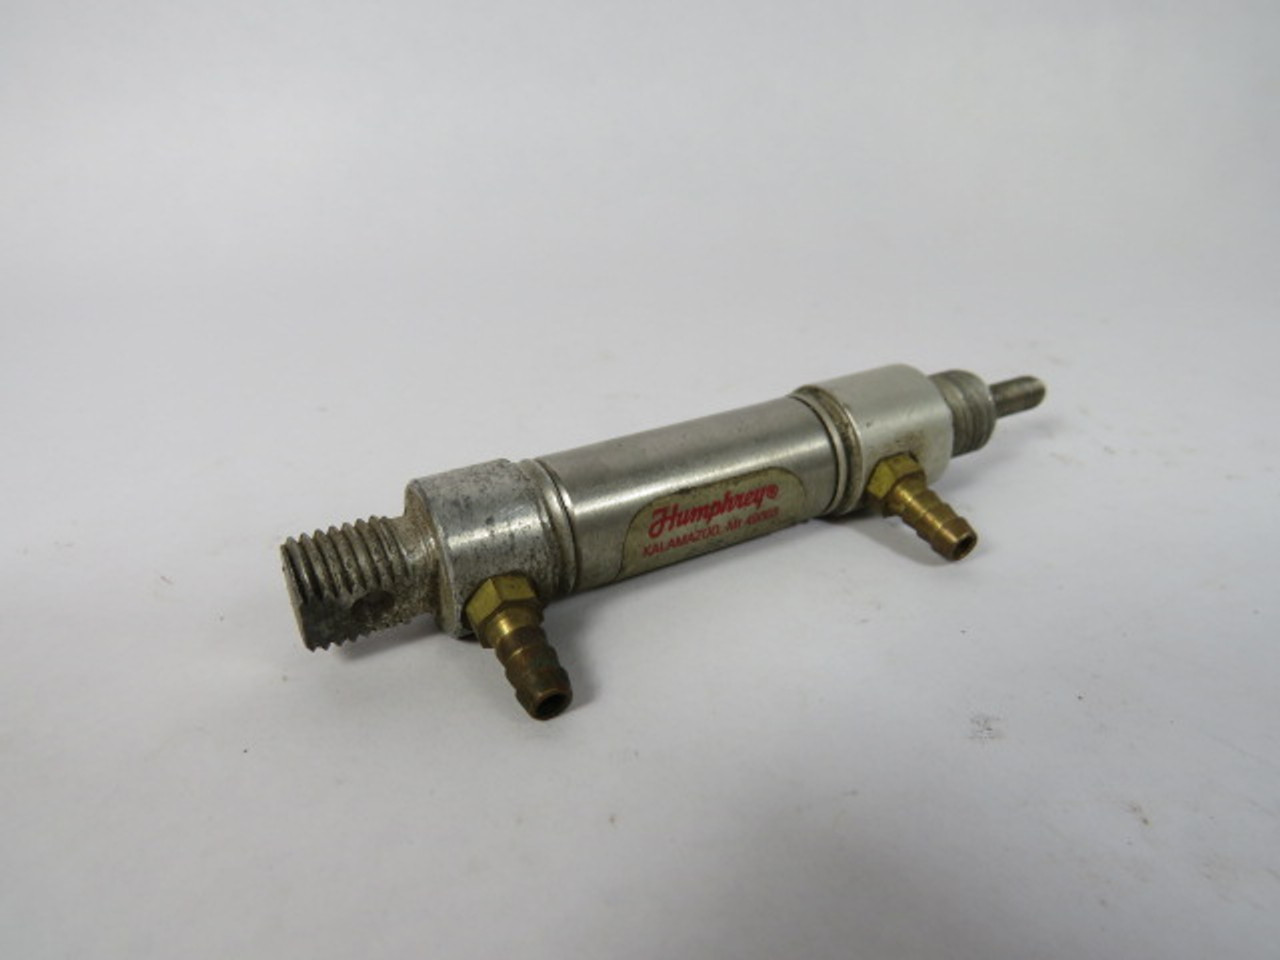 Humphrey 8-DP-1/2 Pneumatic Cylinder 1/2" Bore 1/2" Bore USED